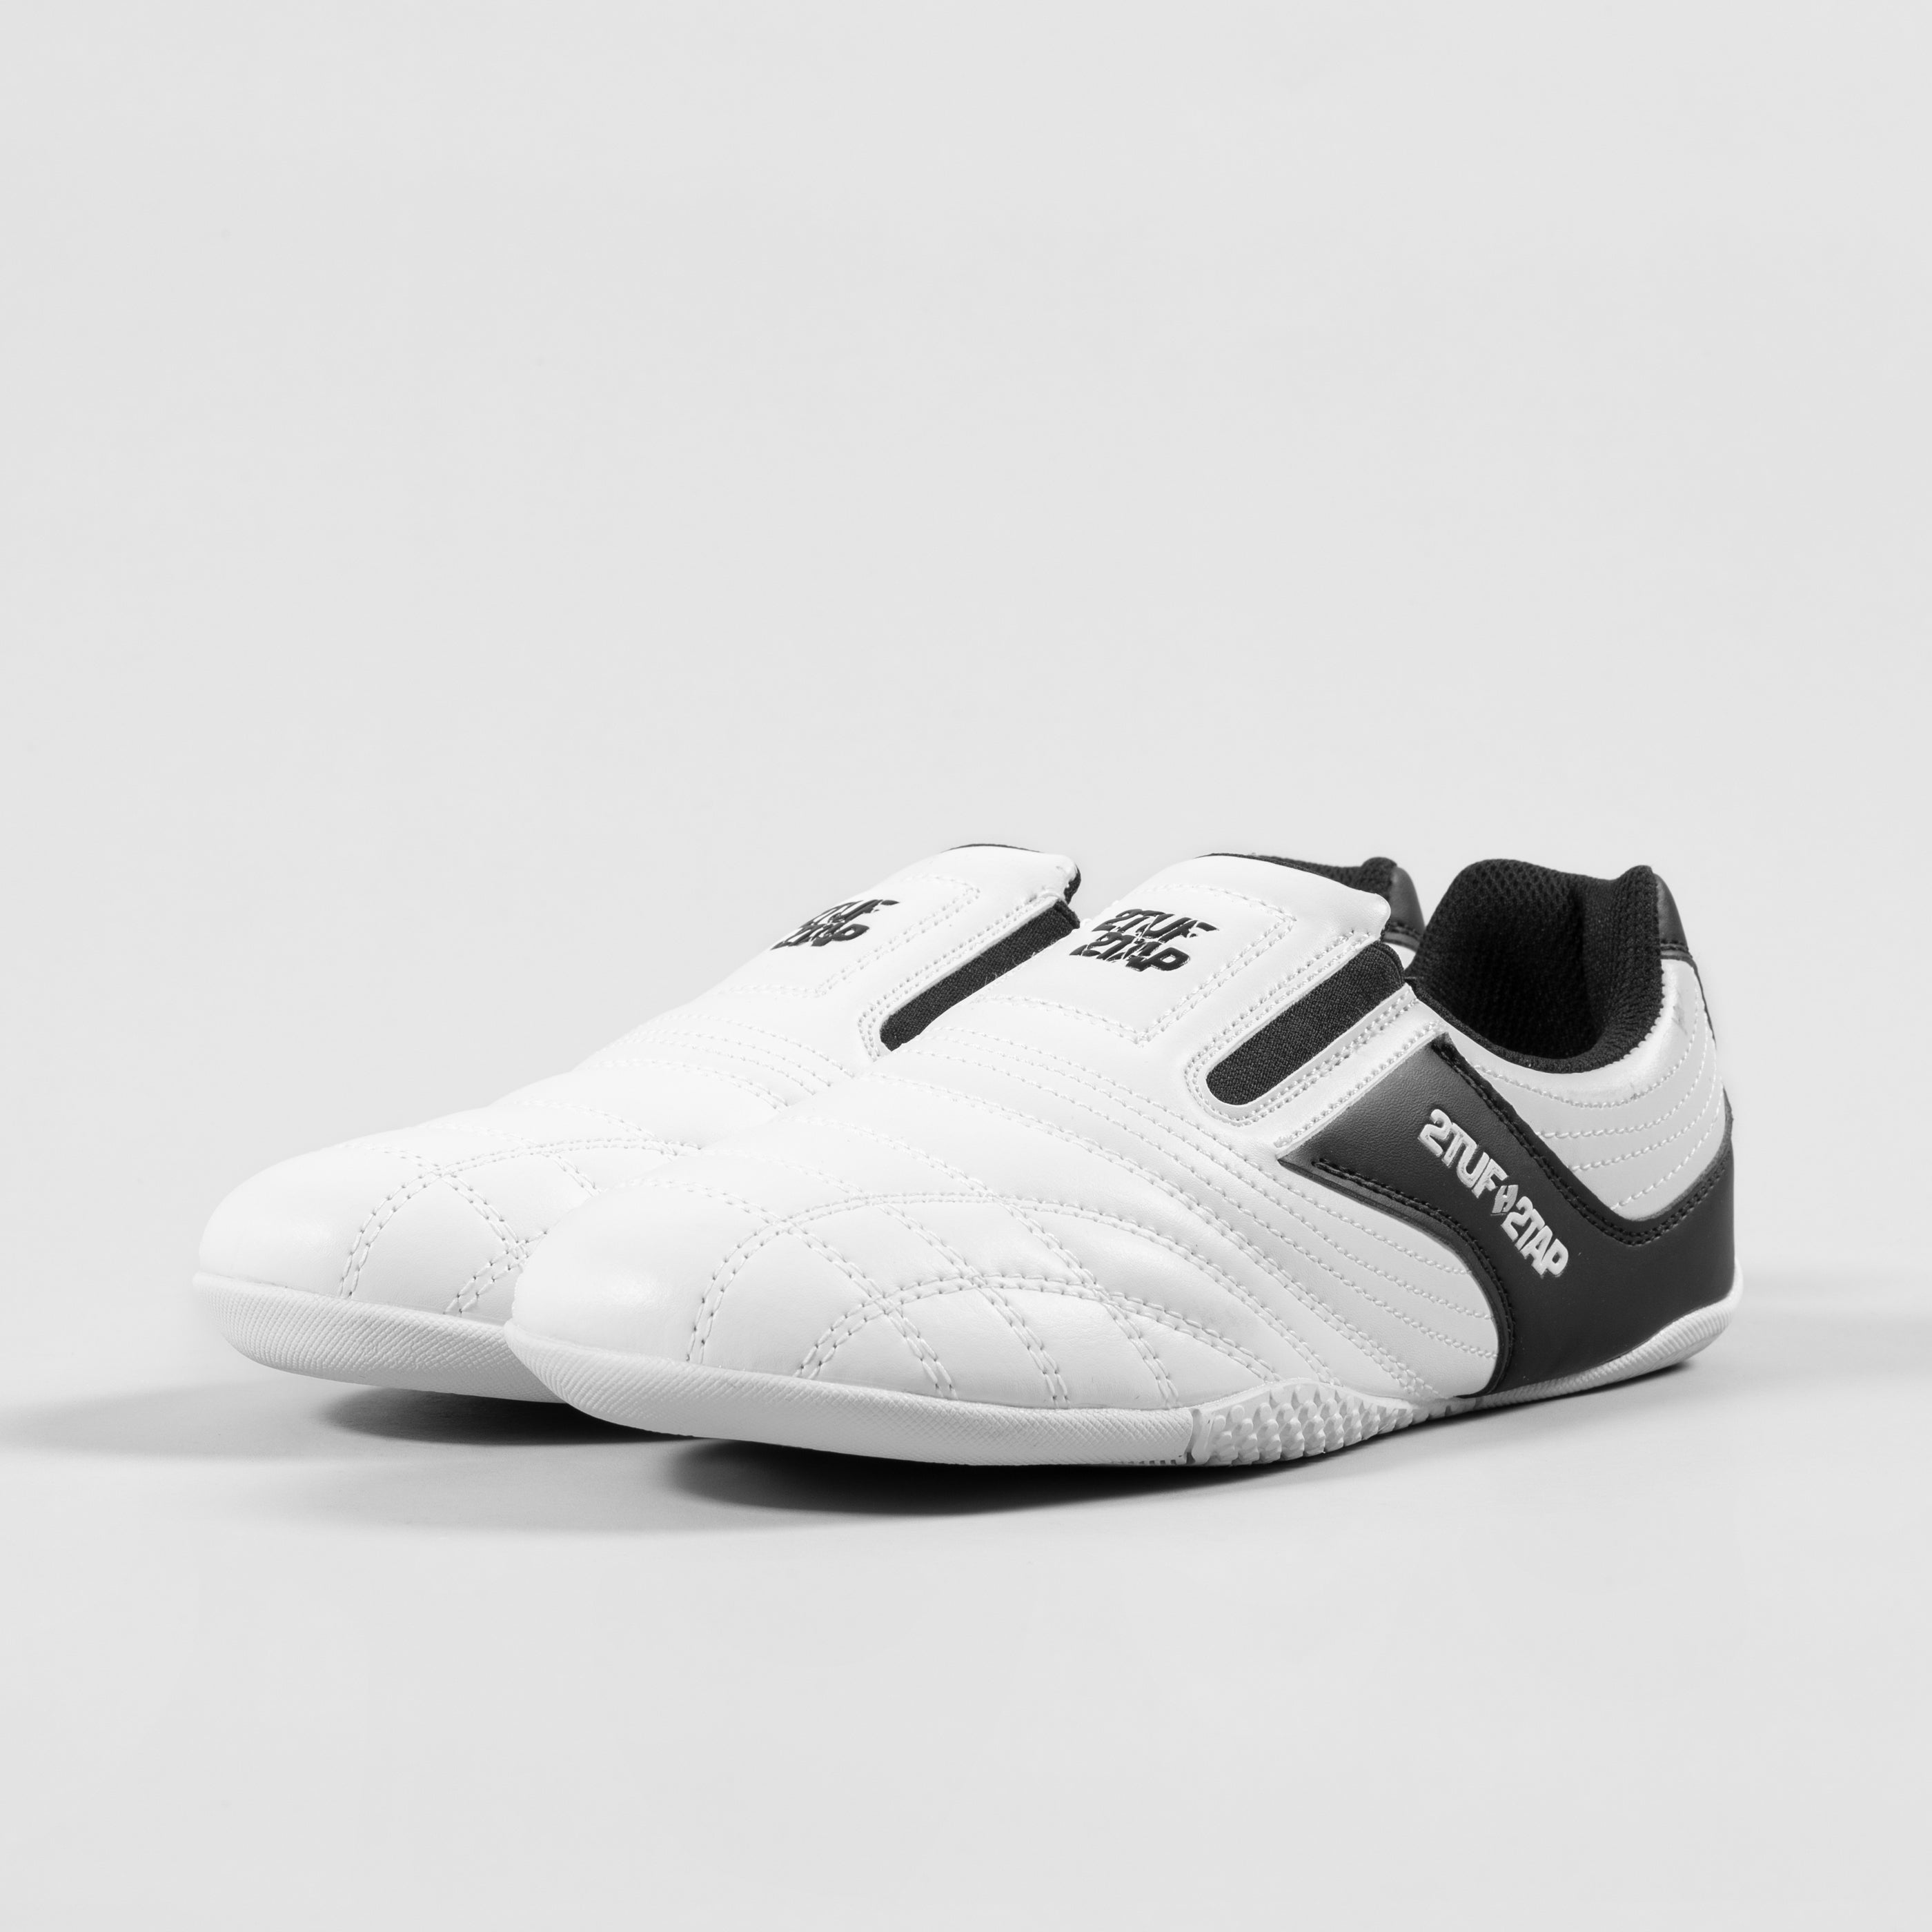 'Tempo' Taekwondo Training Shoes - White/Black 2TUF2TAP